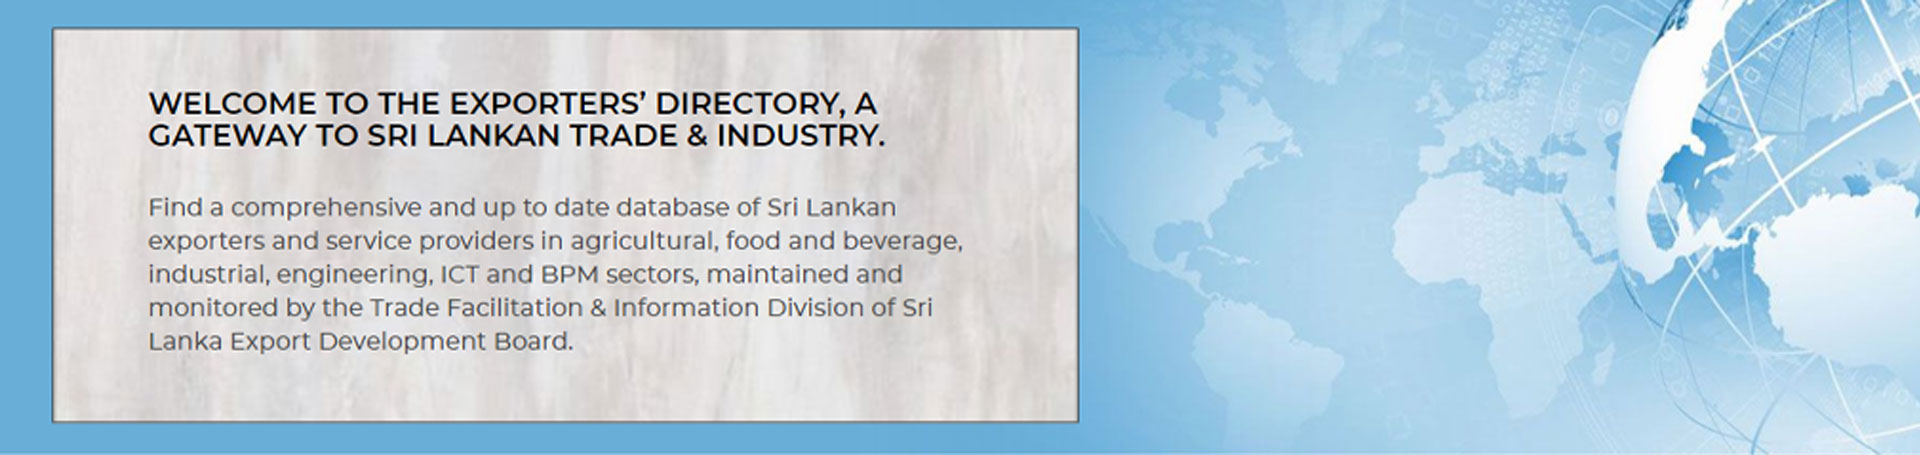 EDB Online Directory of Sri Lankan Exporters